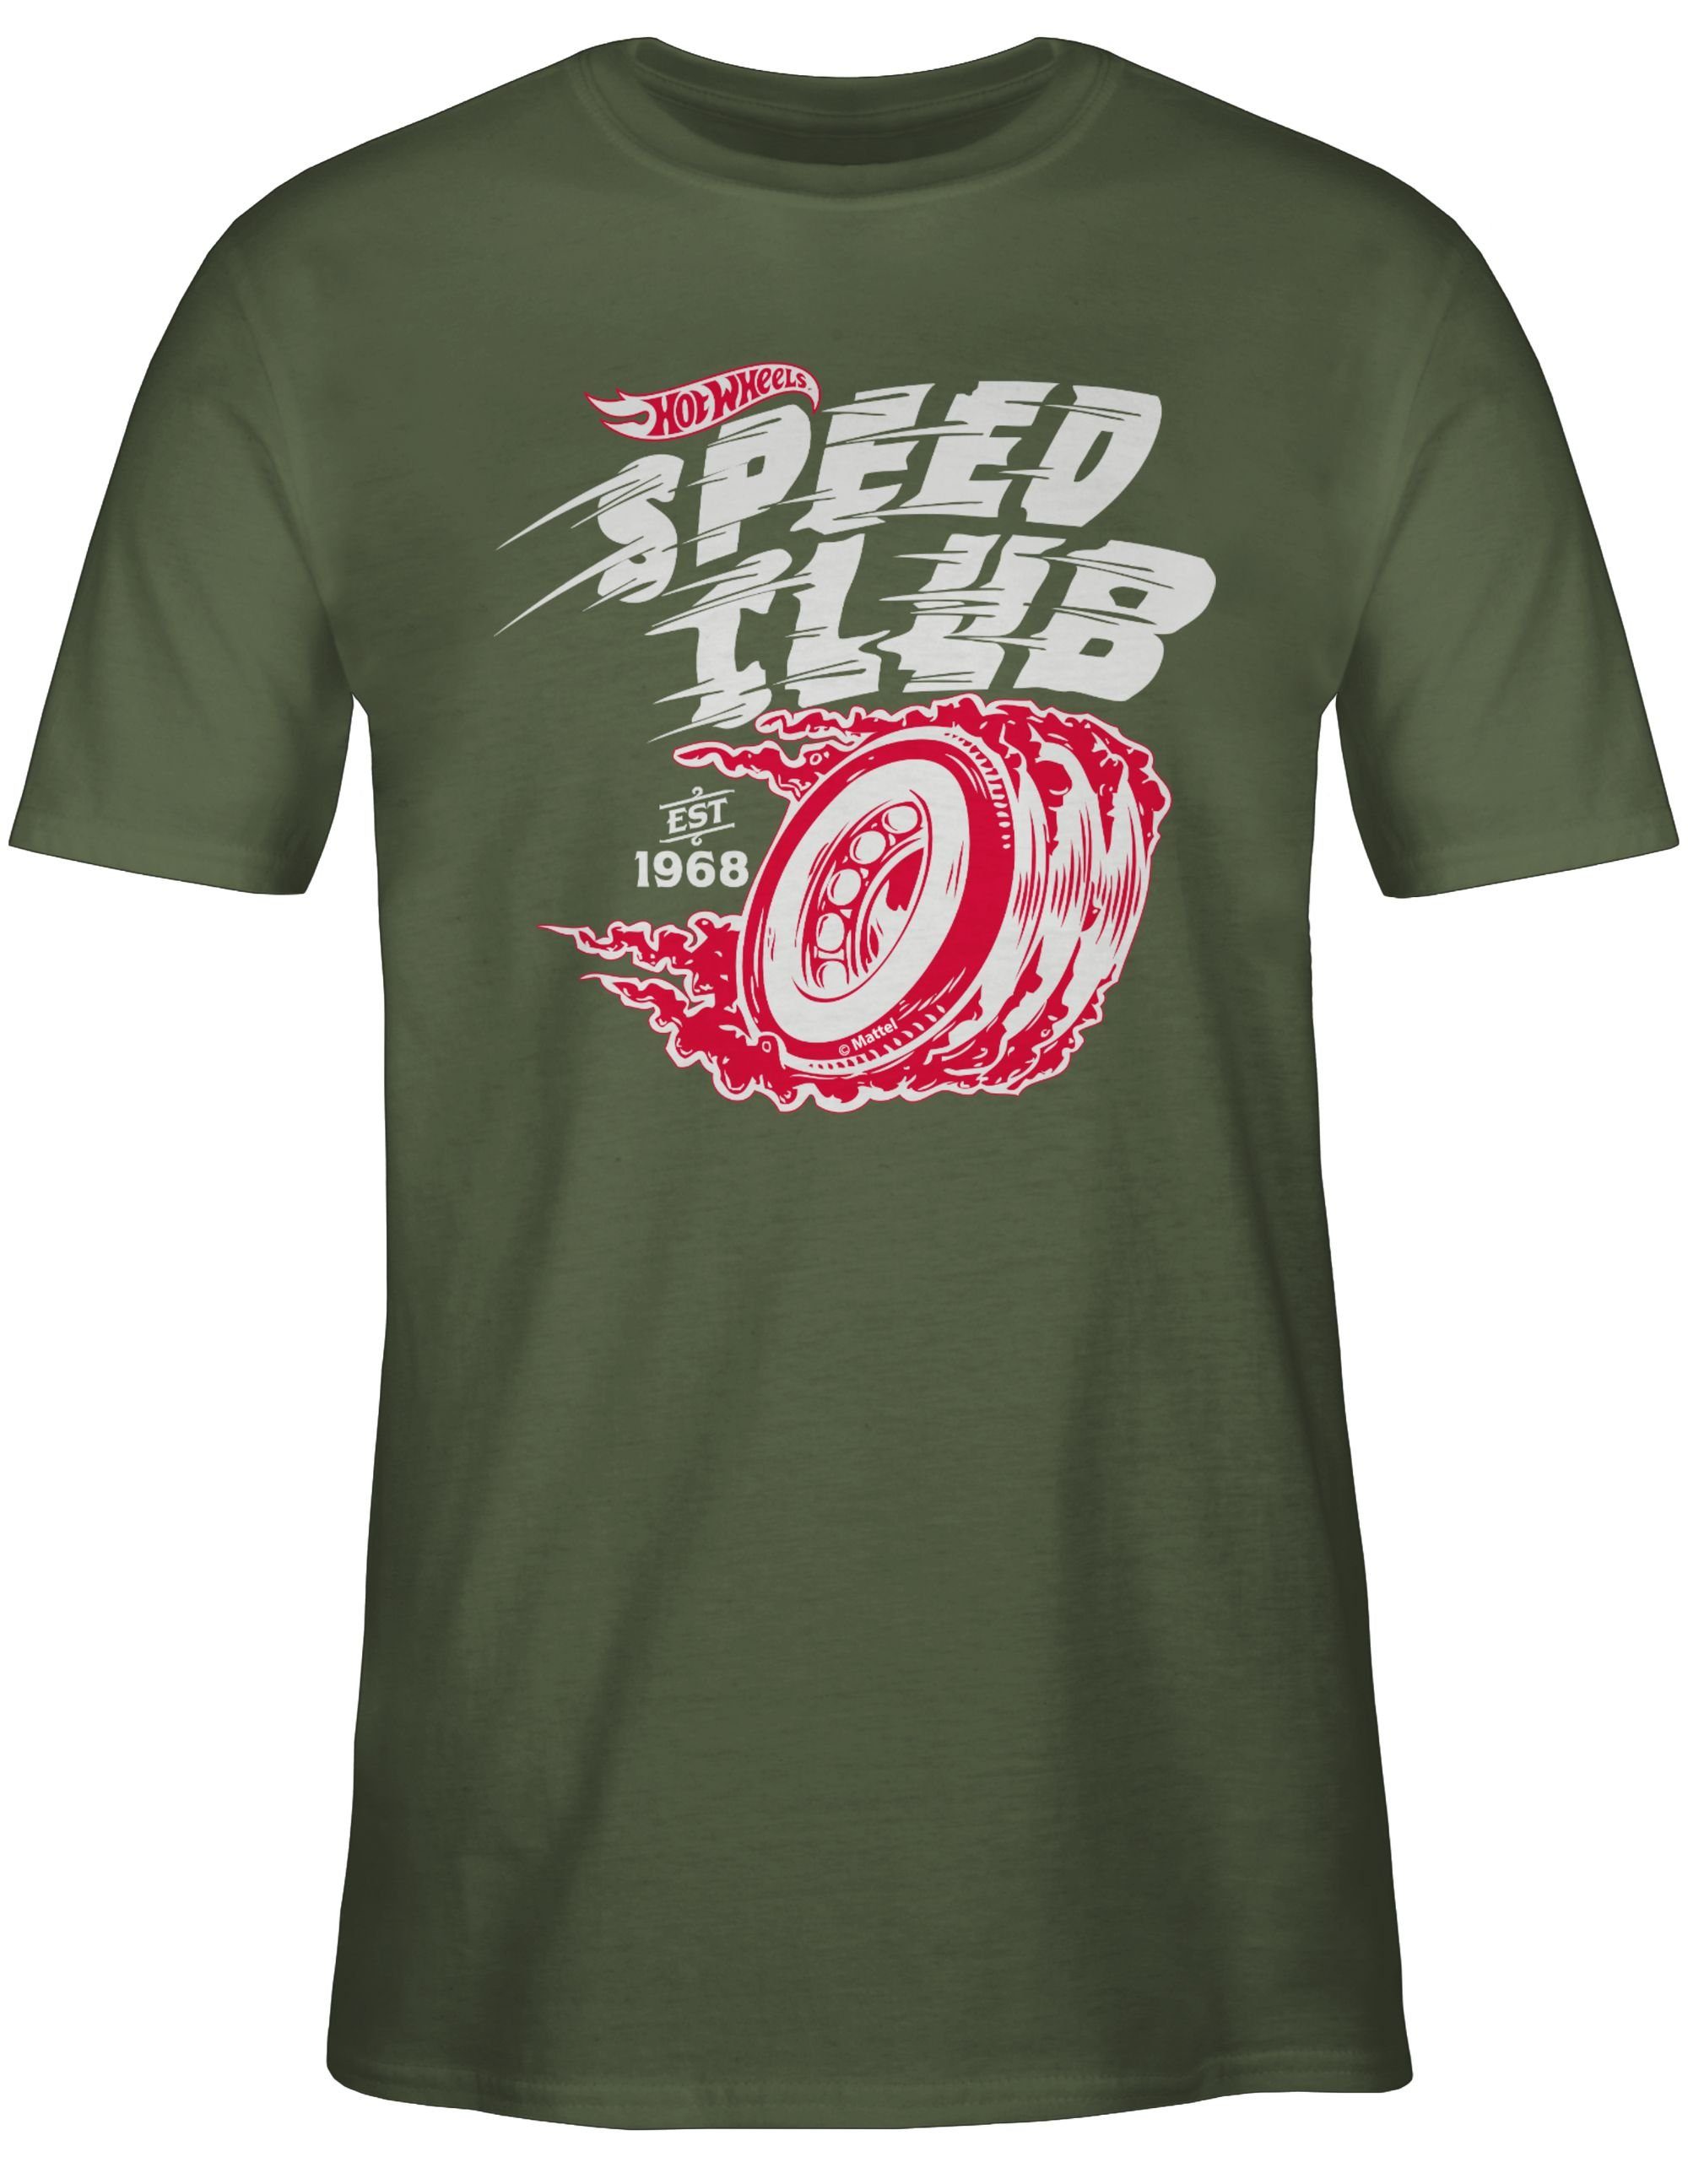 Shirtracer T-Shirt weiß/rot - Hot Wheels Speed Club Army Herren Grün 03